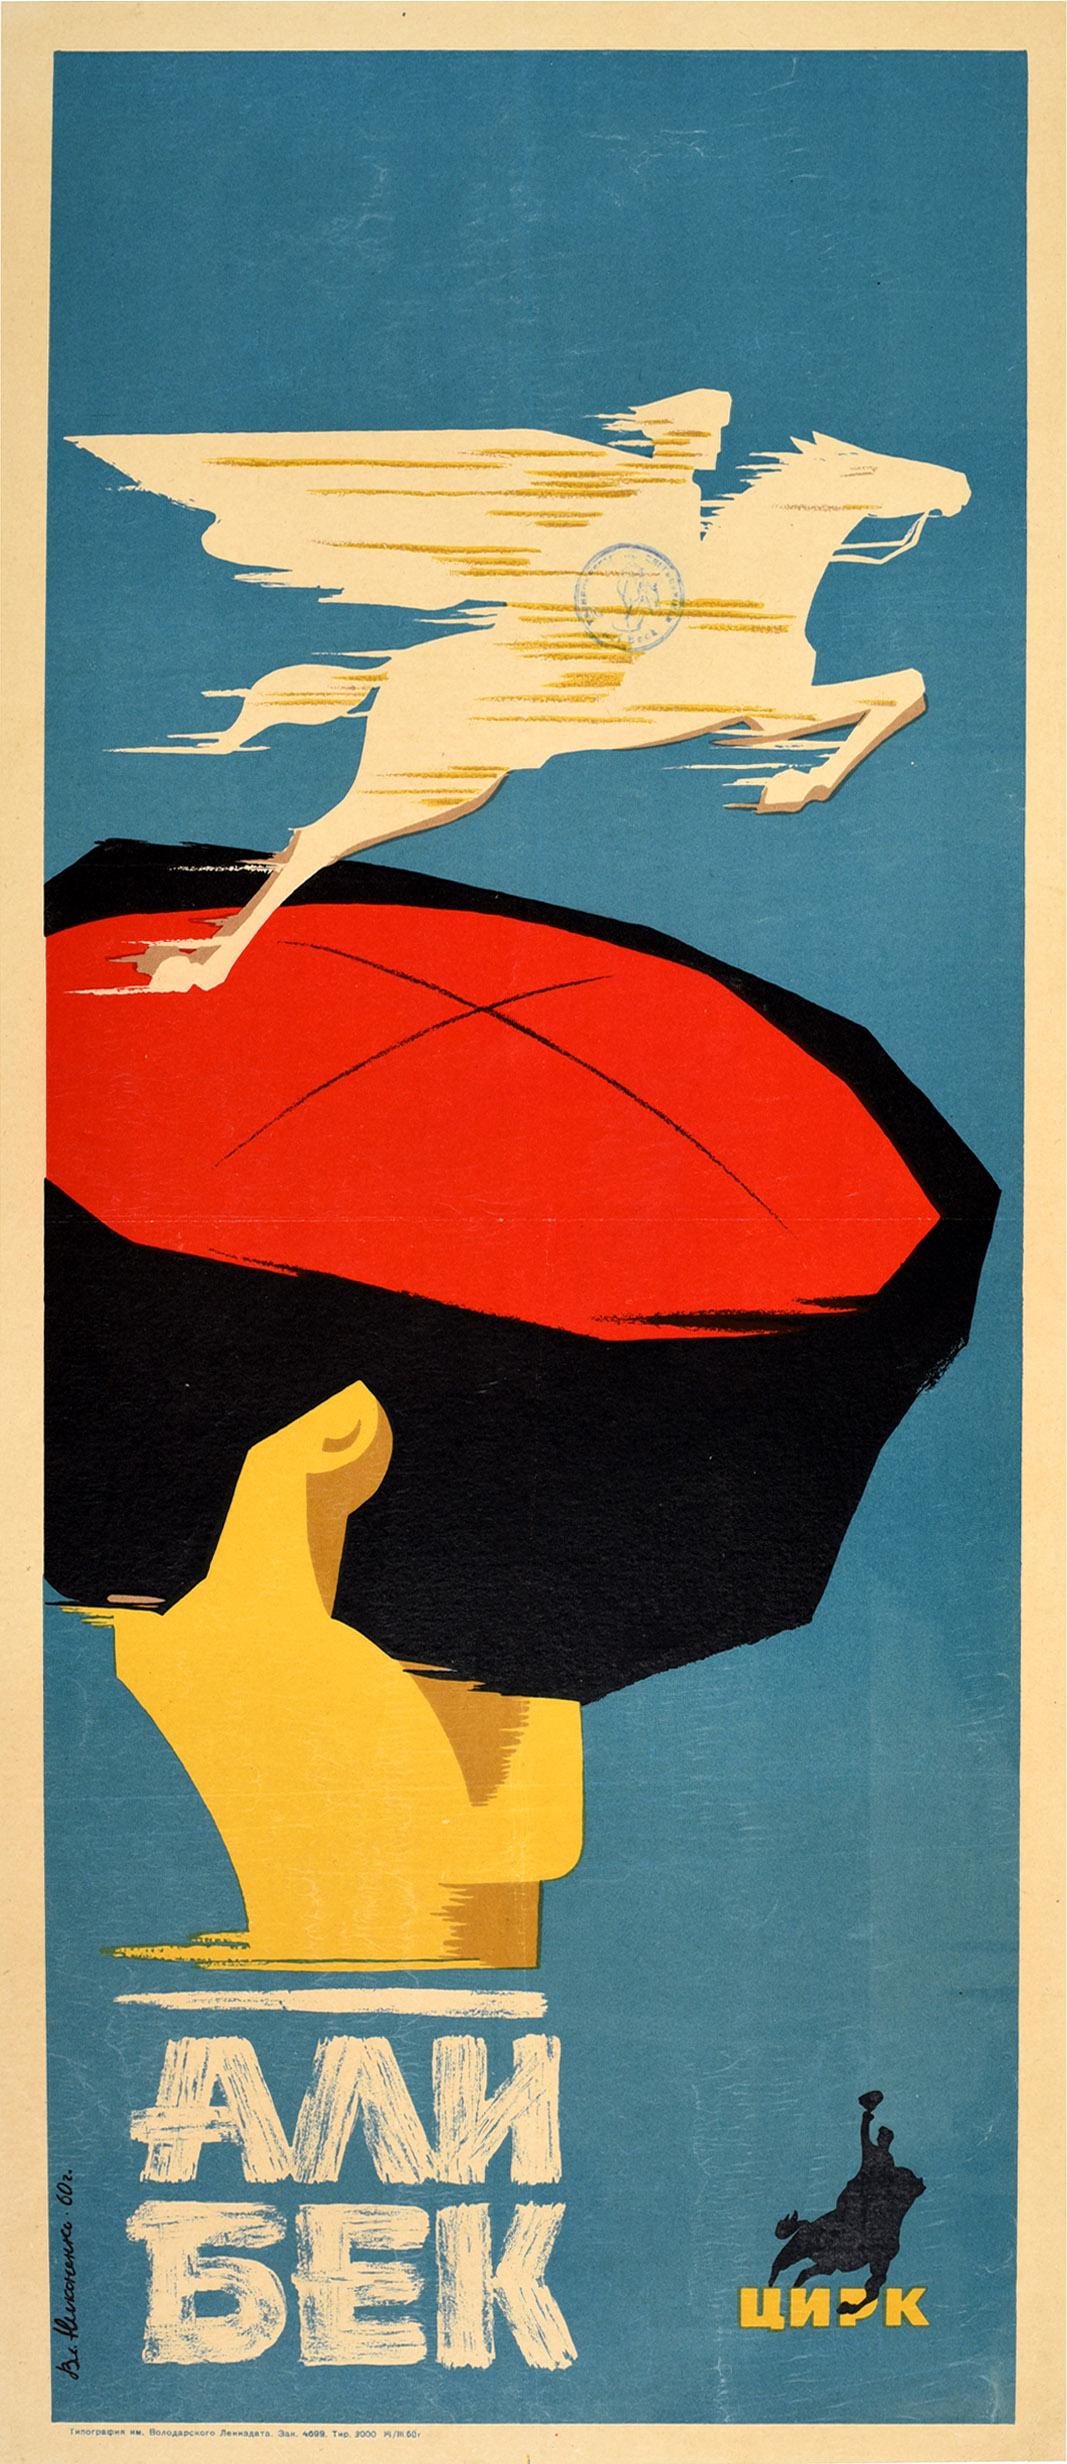 Nikonenko Print - Original Vintage Circus Poster For The Alibek Cyrk Horse Rider Performance Art